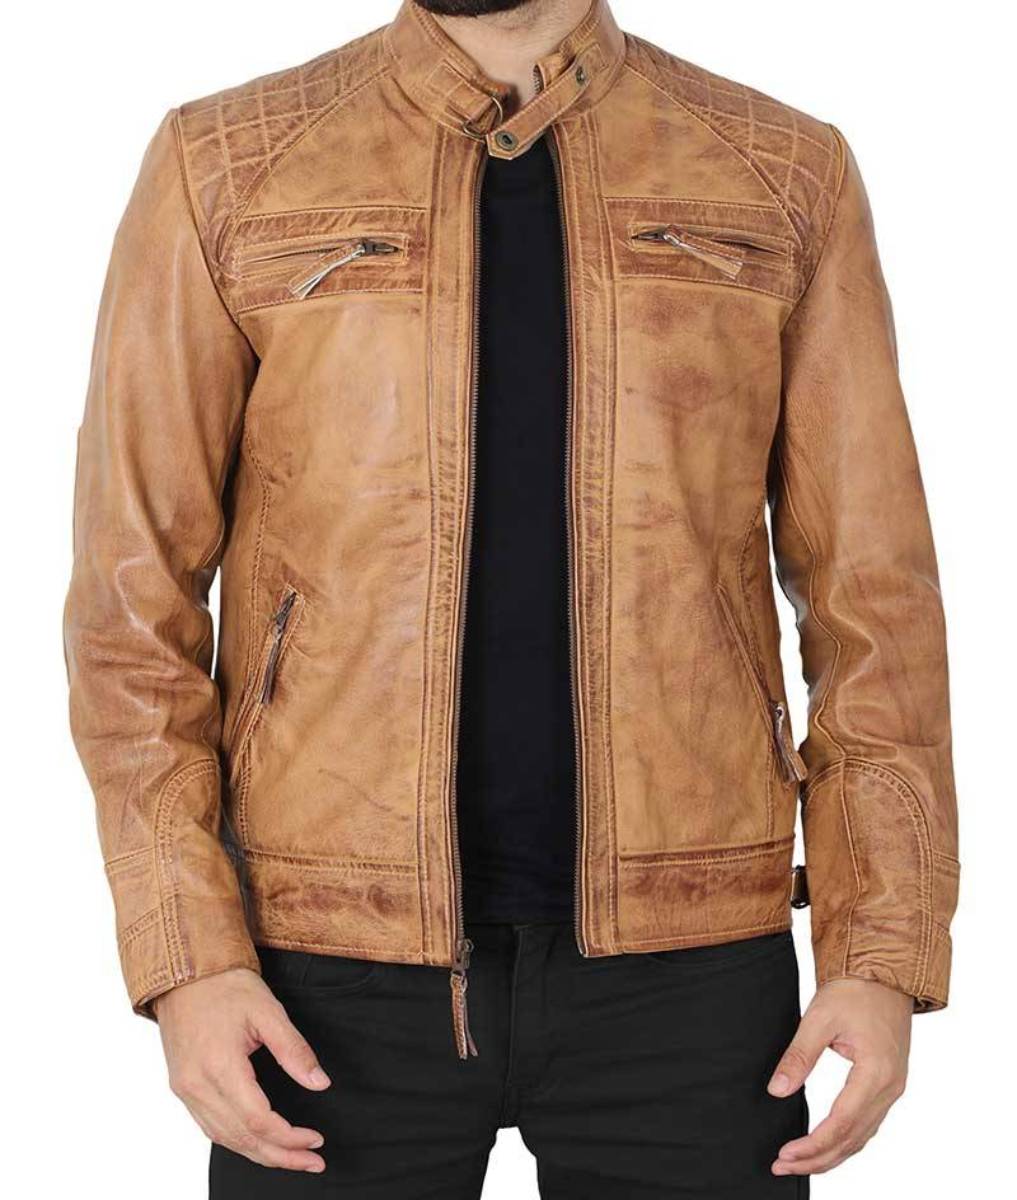 Johnson_Camel_Brown_Leather_Jacket